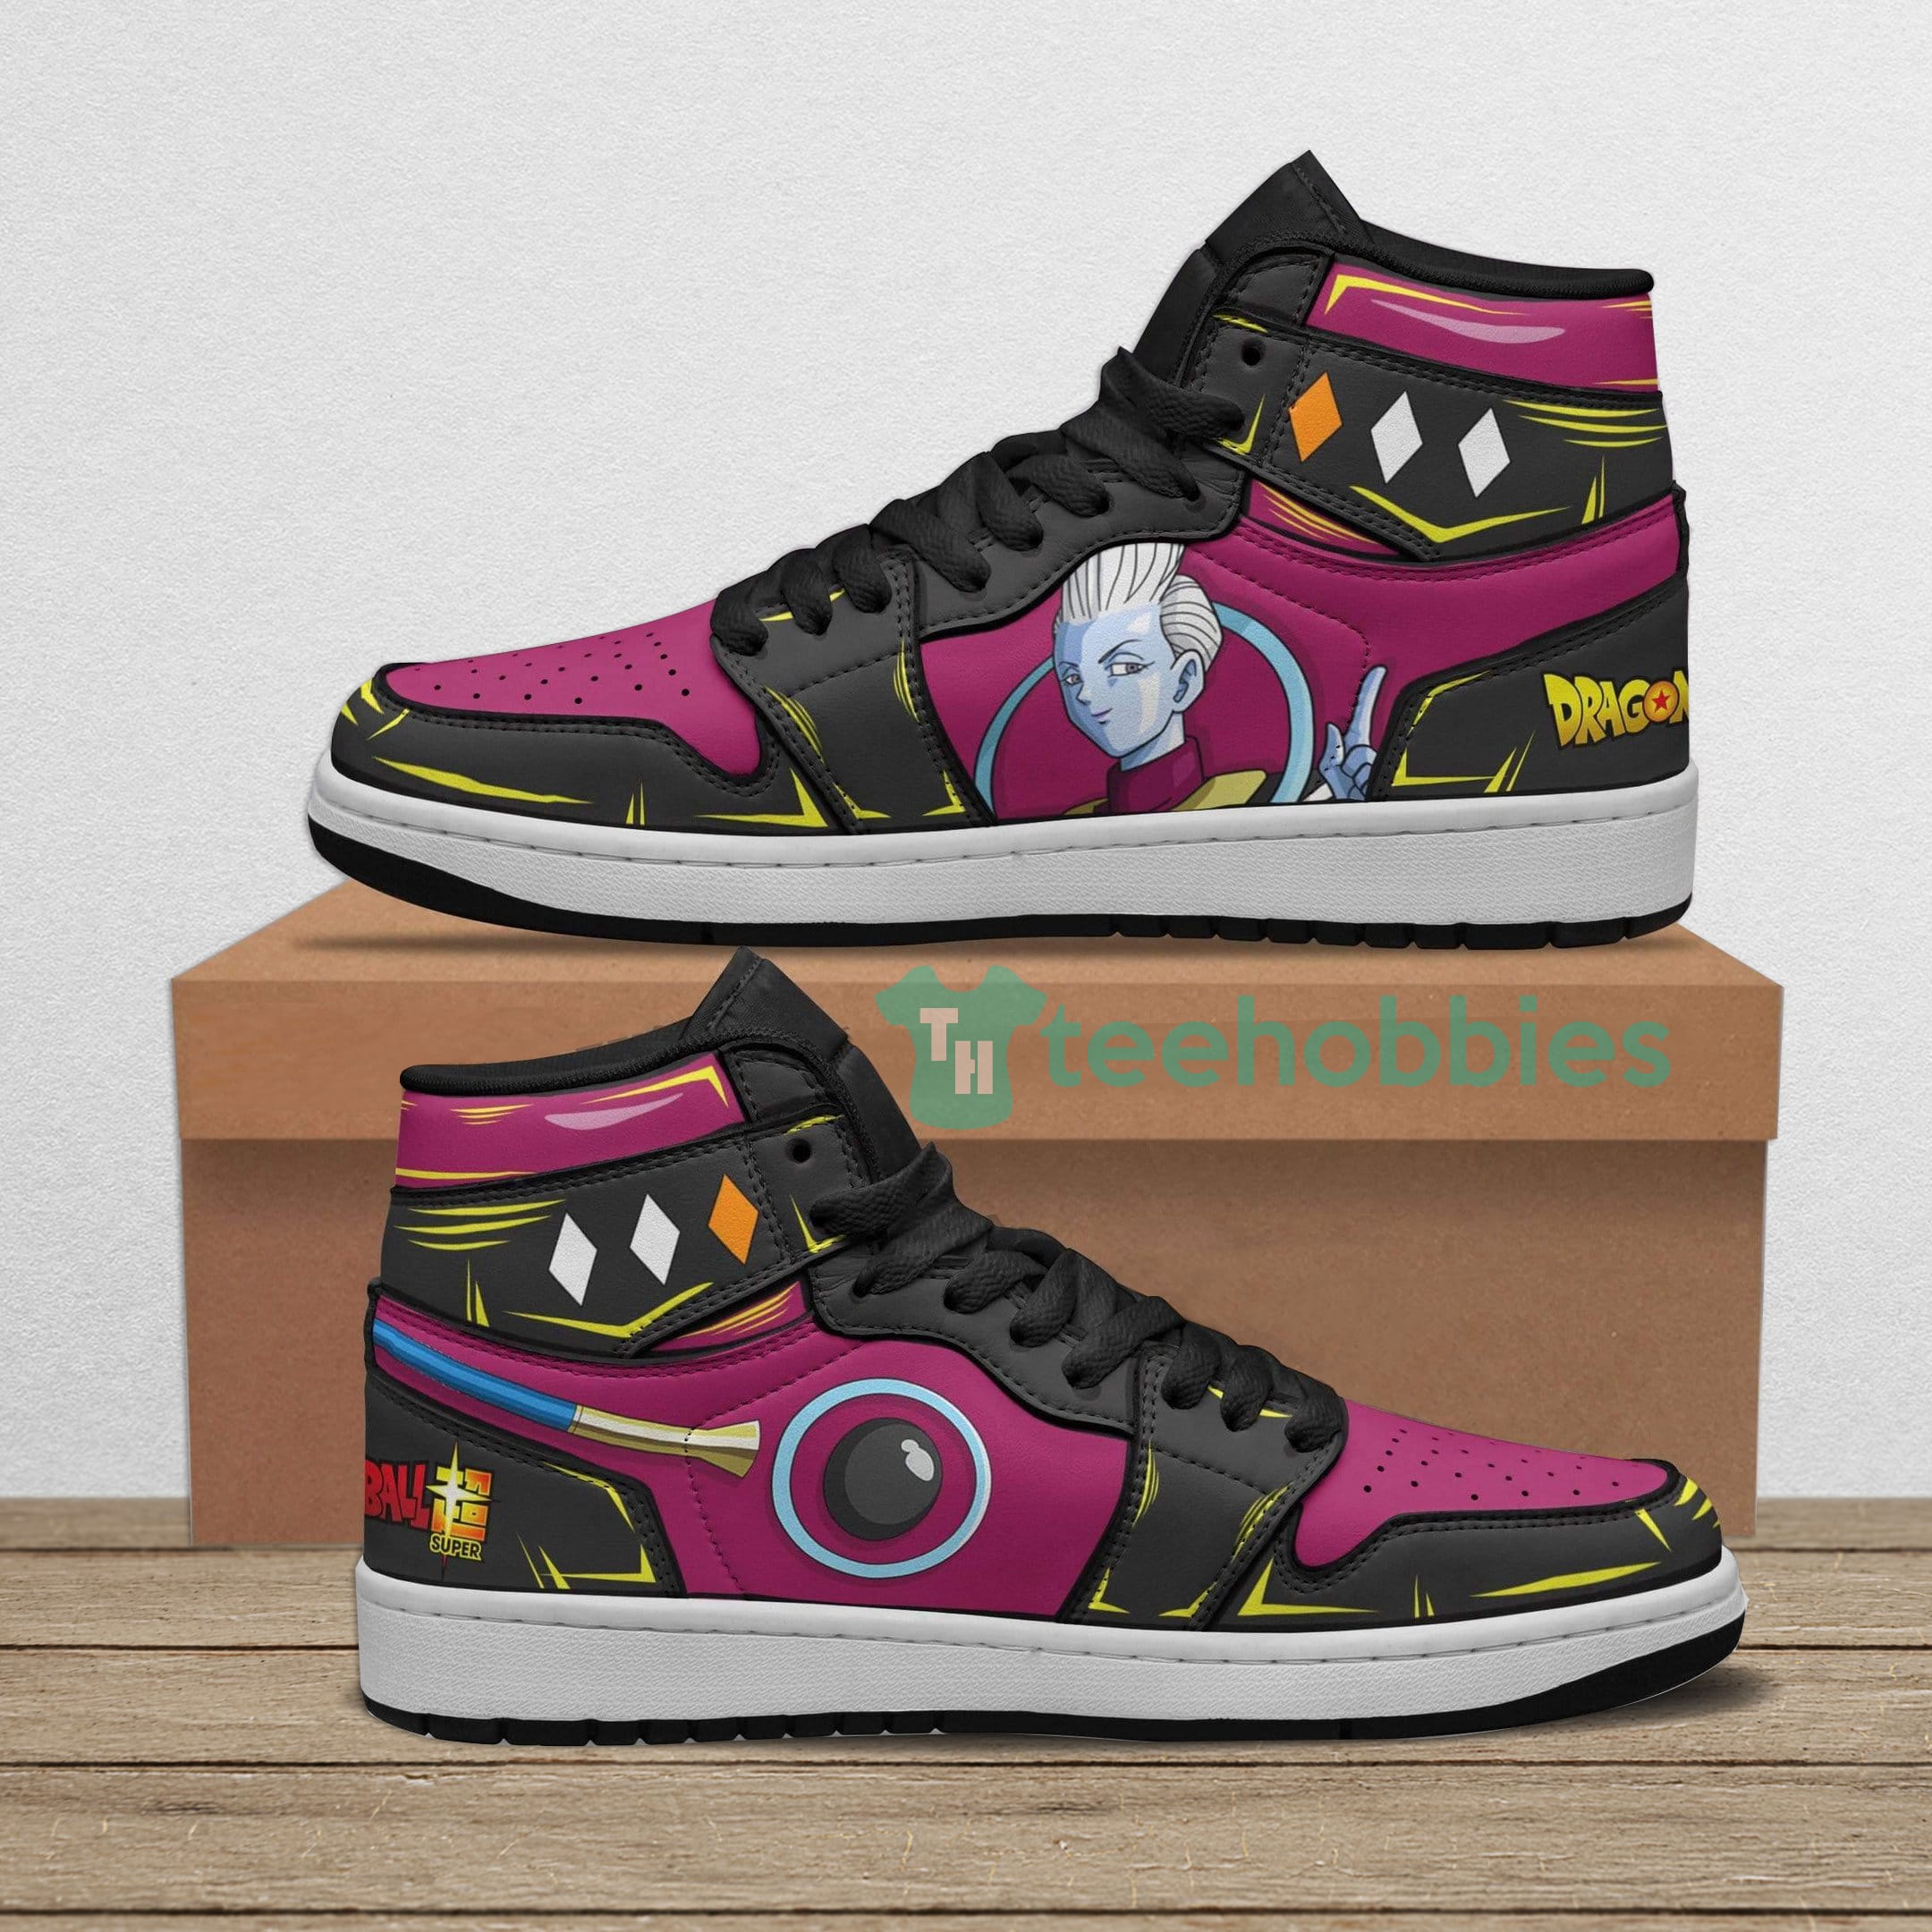 Whis Custom Dragon Ball Anime Air Jordan Hightop Shoes